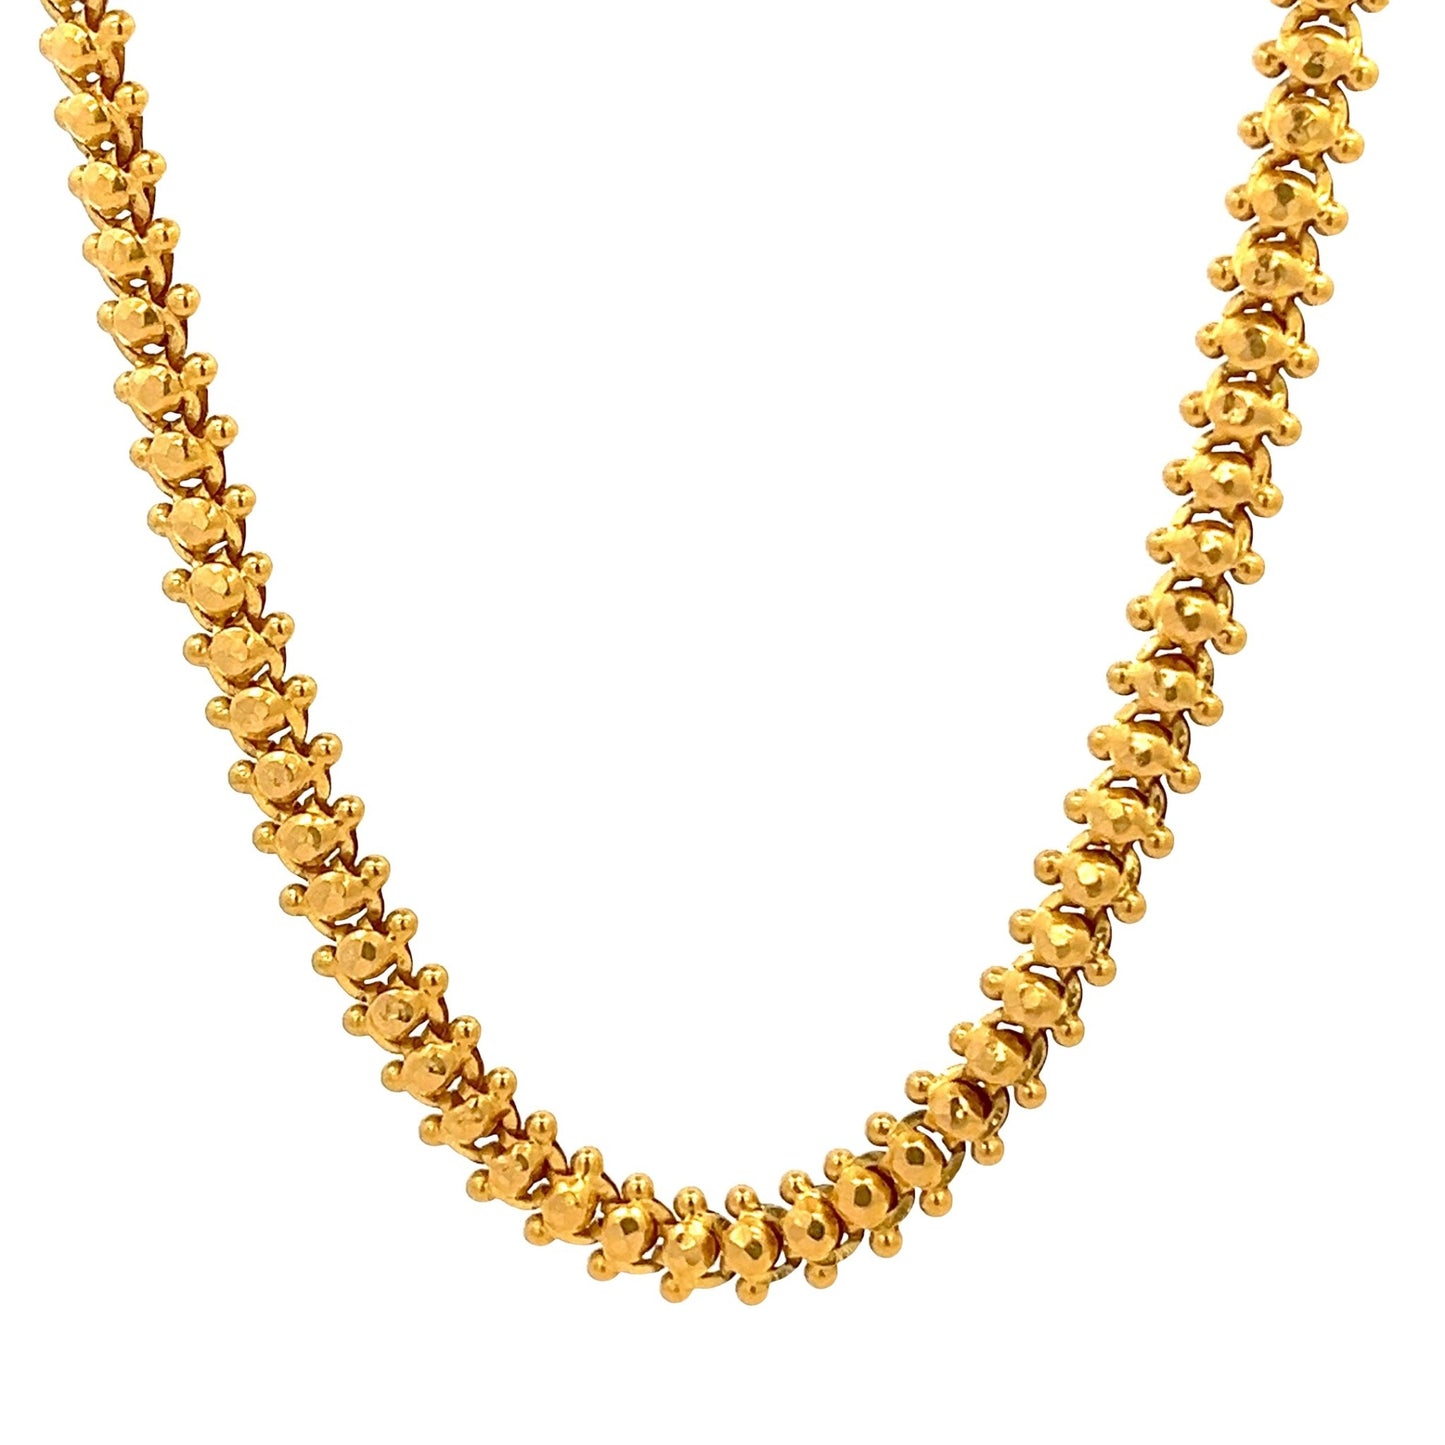 22ct yellow gold necklace unique design 05001226ChainRetroGold